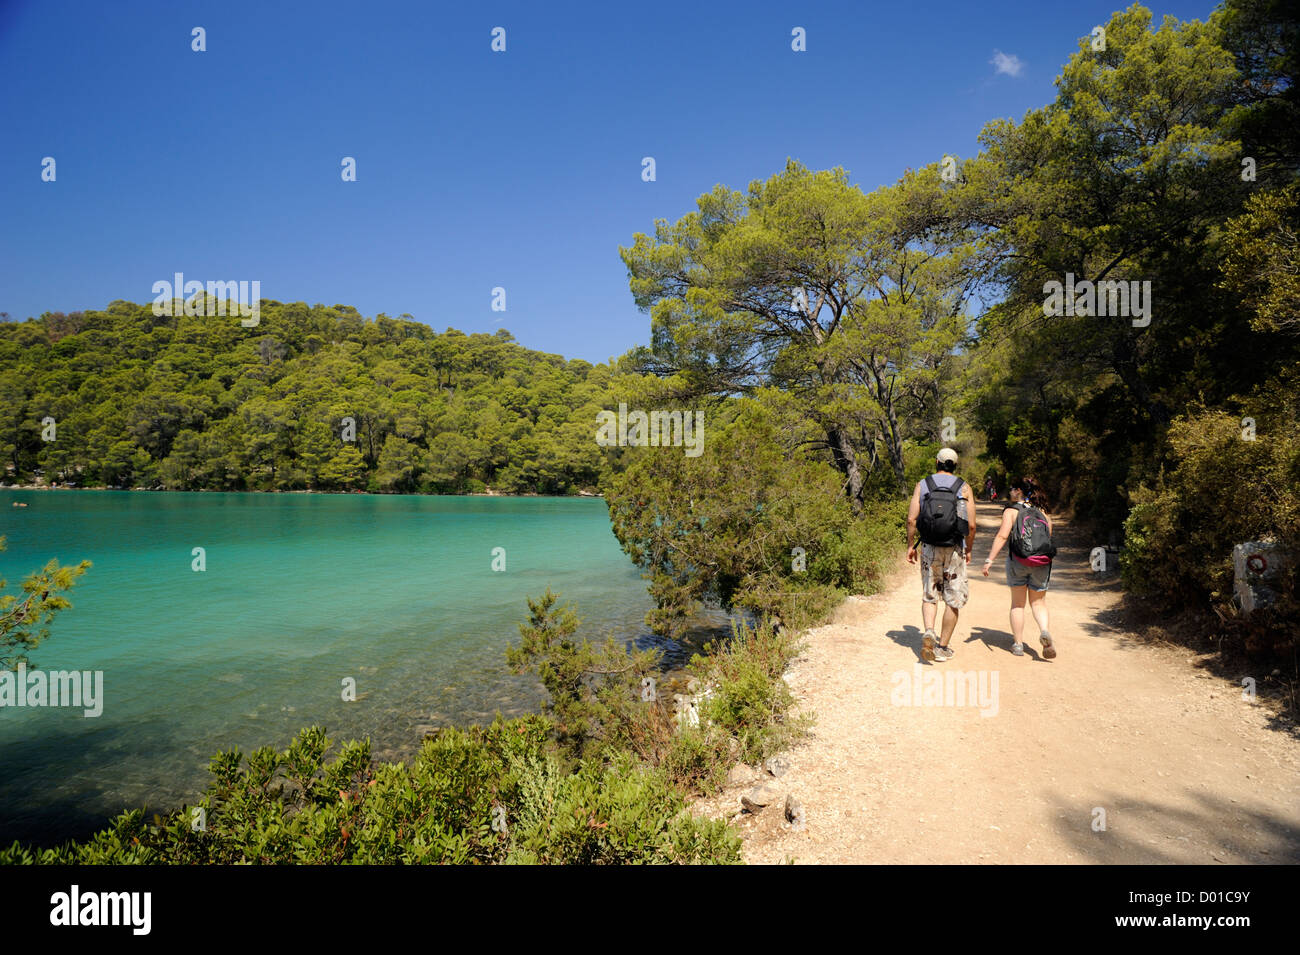 croatia, dalmatia, mljet island, malo jezero lake, people walking along coastal path Stock Photo